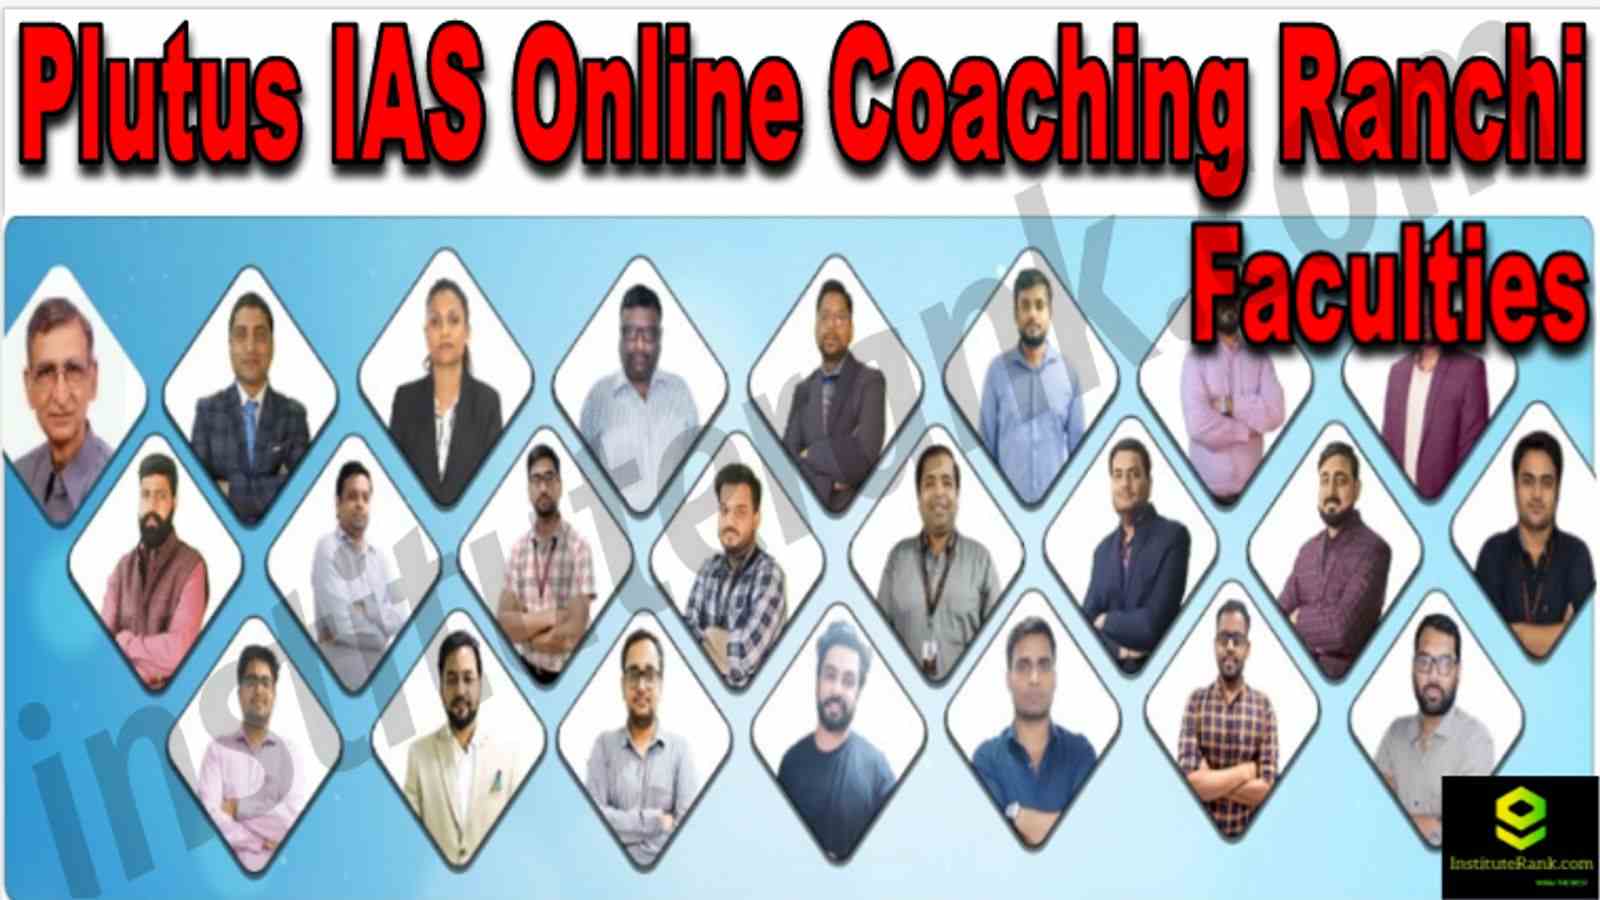 Plutus IAS Online Coaching Ranchi Reviews Faculties